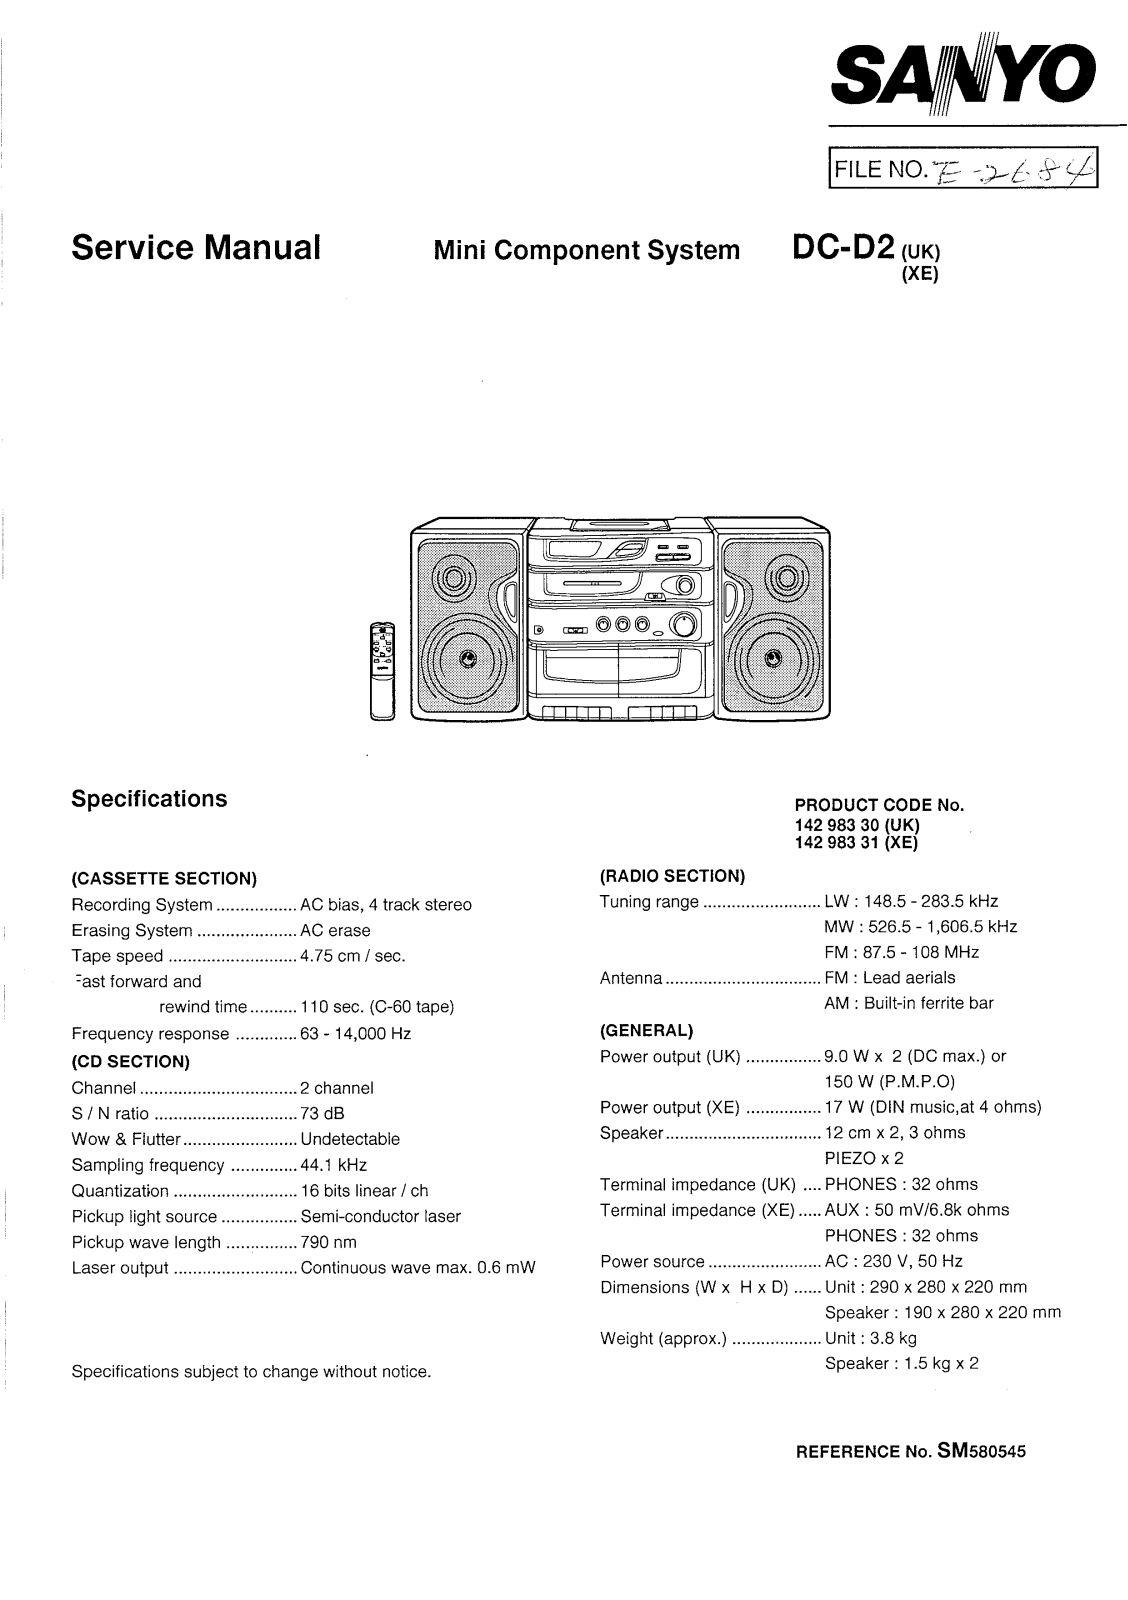 Sanyo DCD-2 Service manual